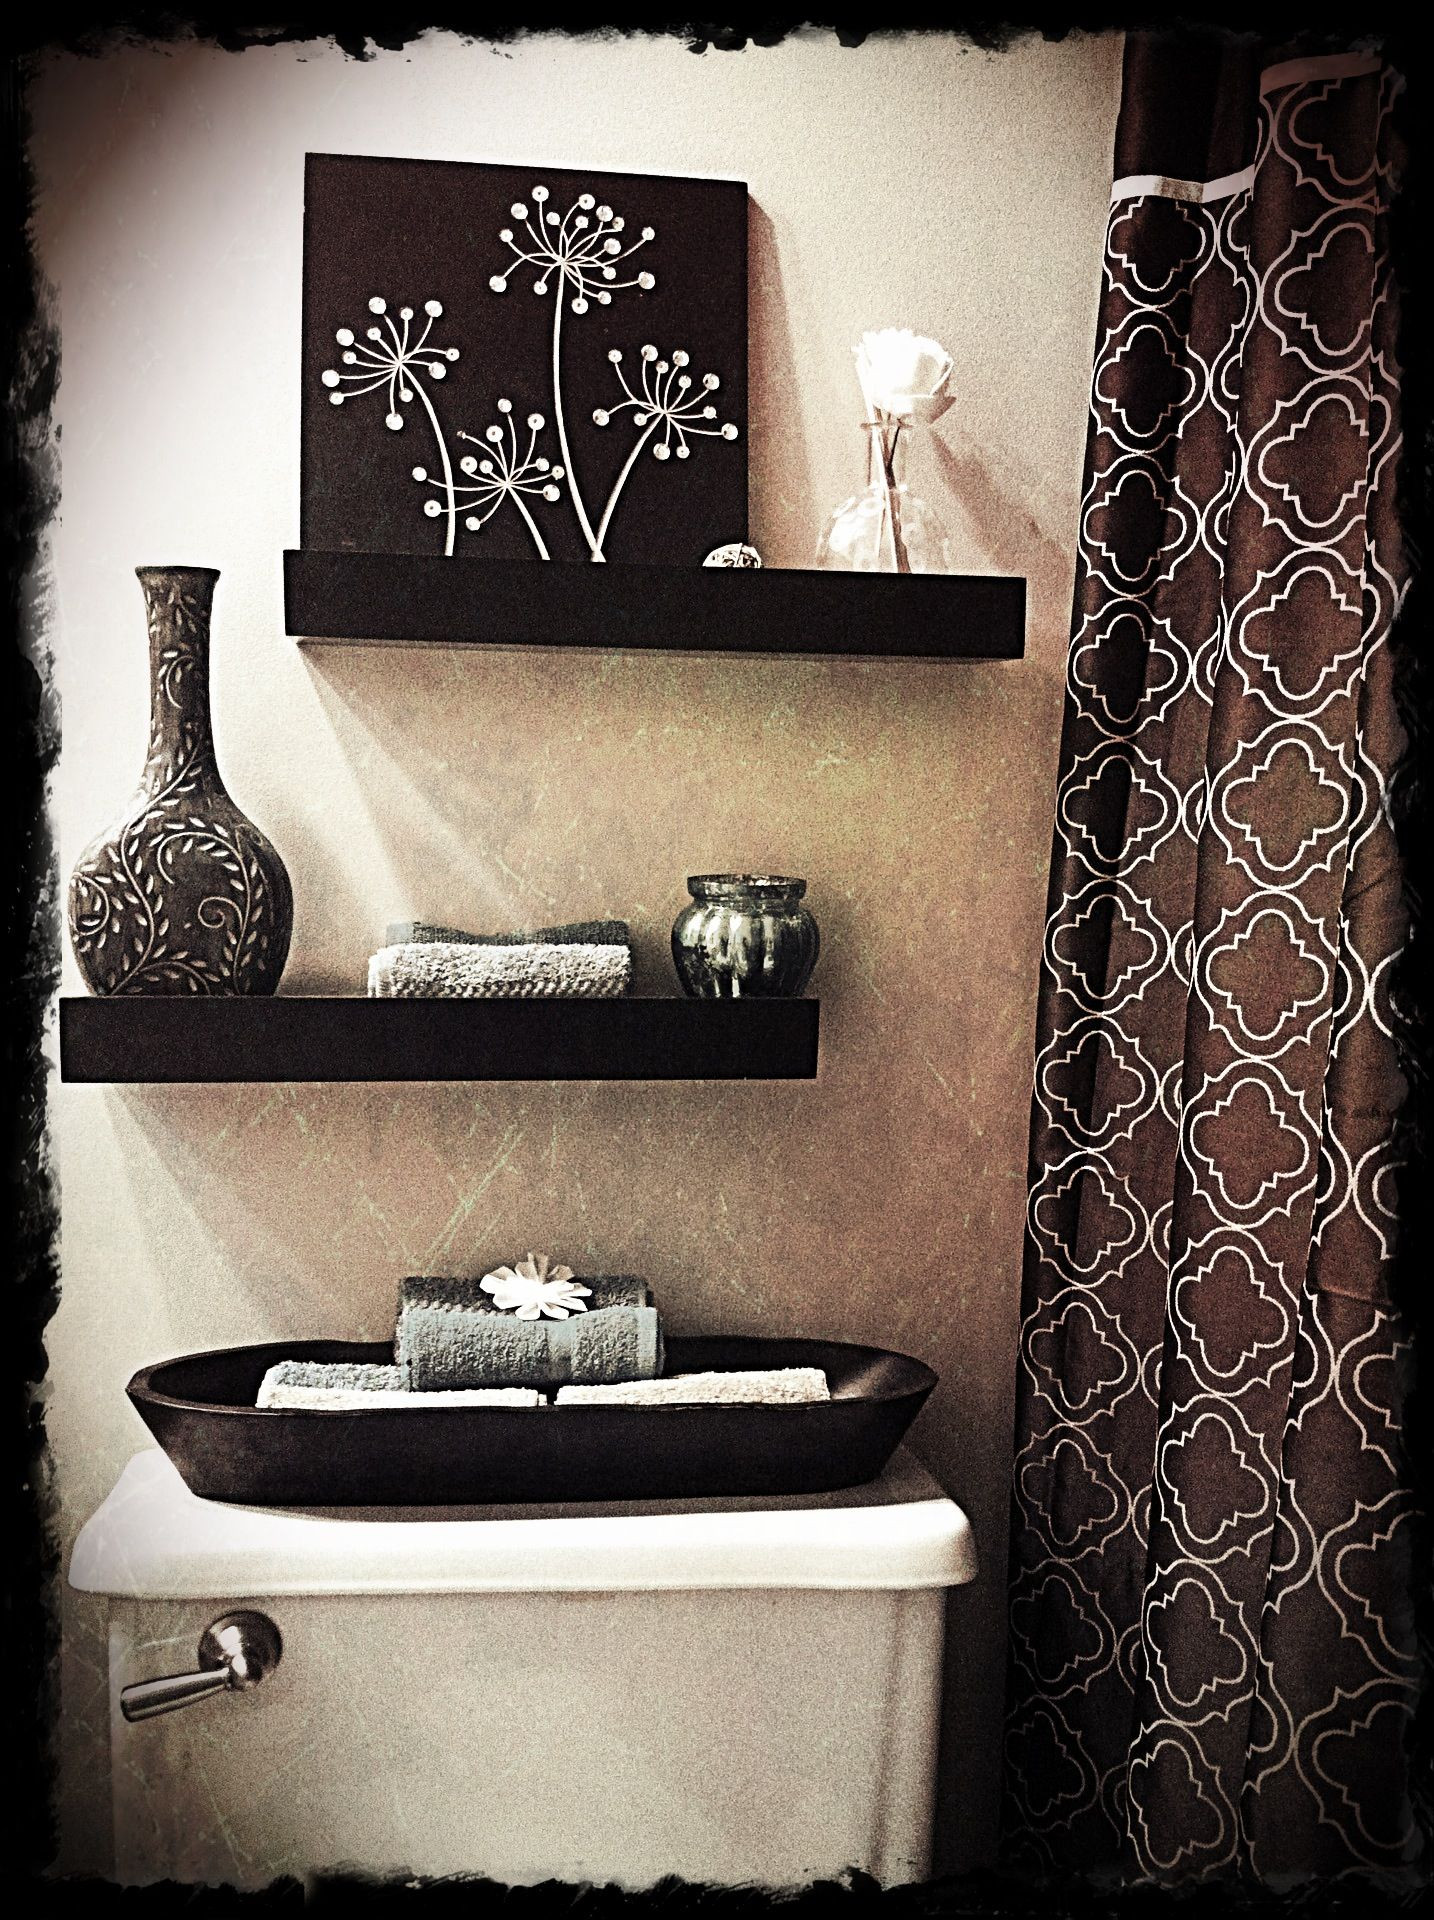 Decorative Bathroom Shelves
 20 Practical And Decorative Bathroom Ideas